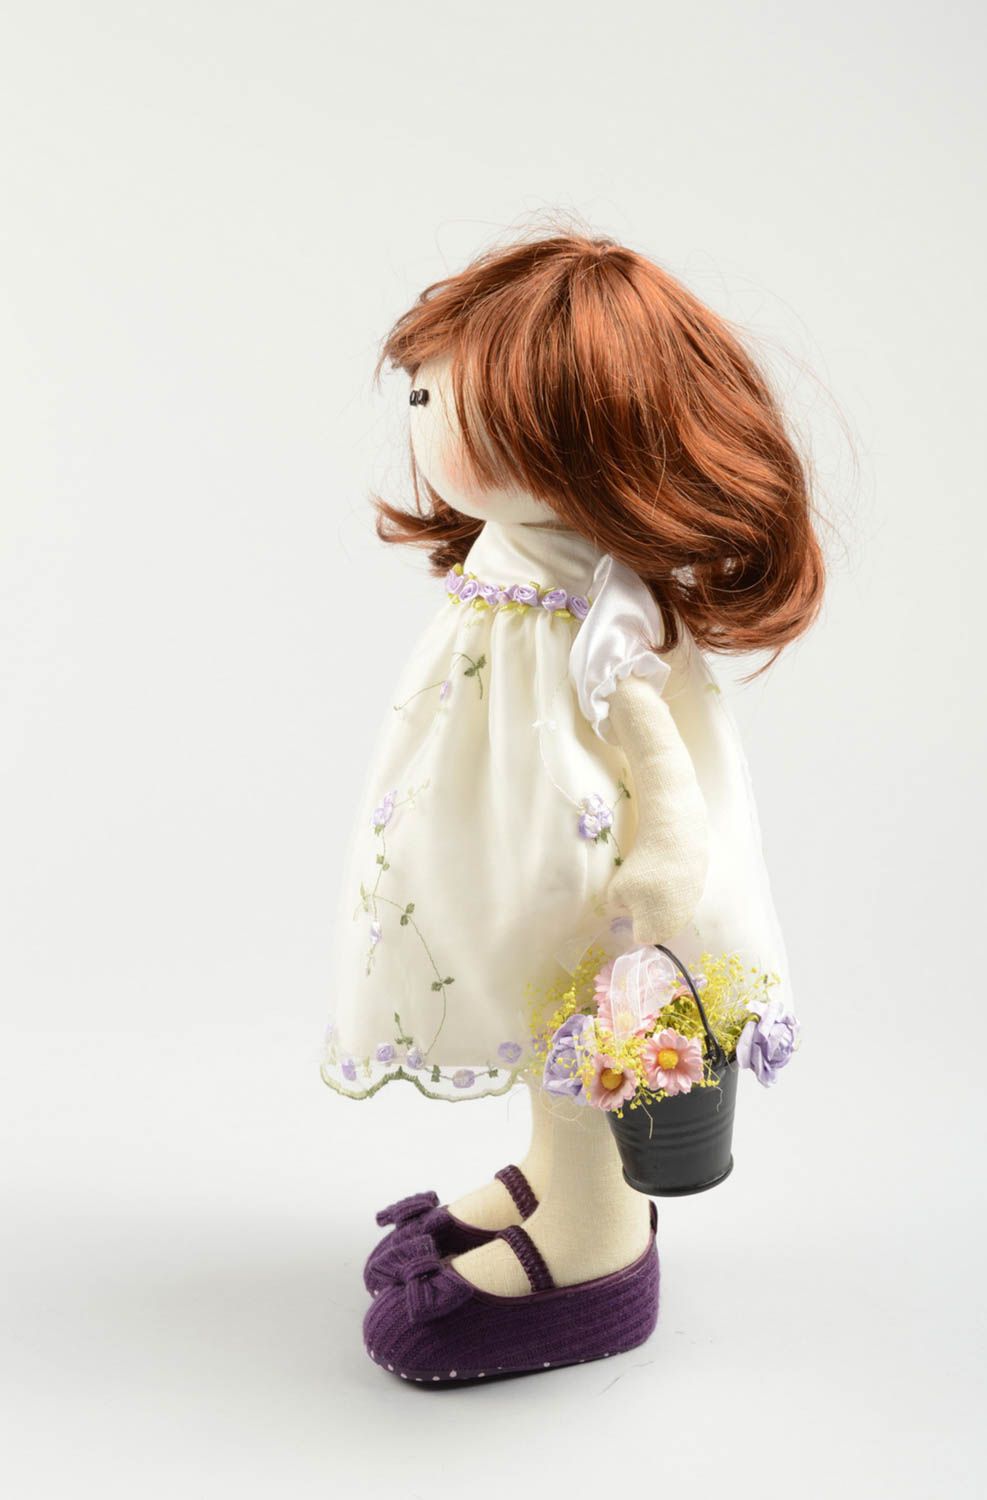 Beautiful handmade rag doll best toys for kids room decor ideas gift ideas photo 2